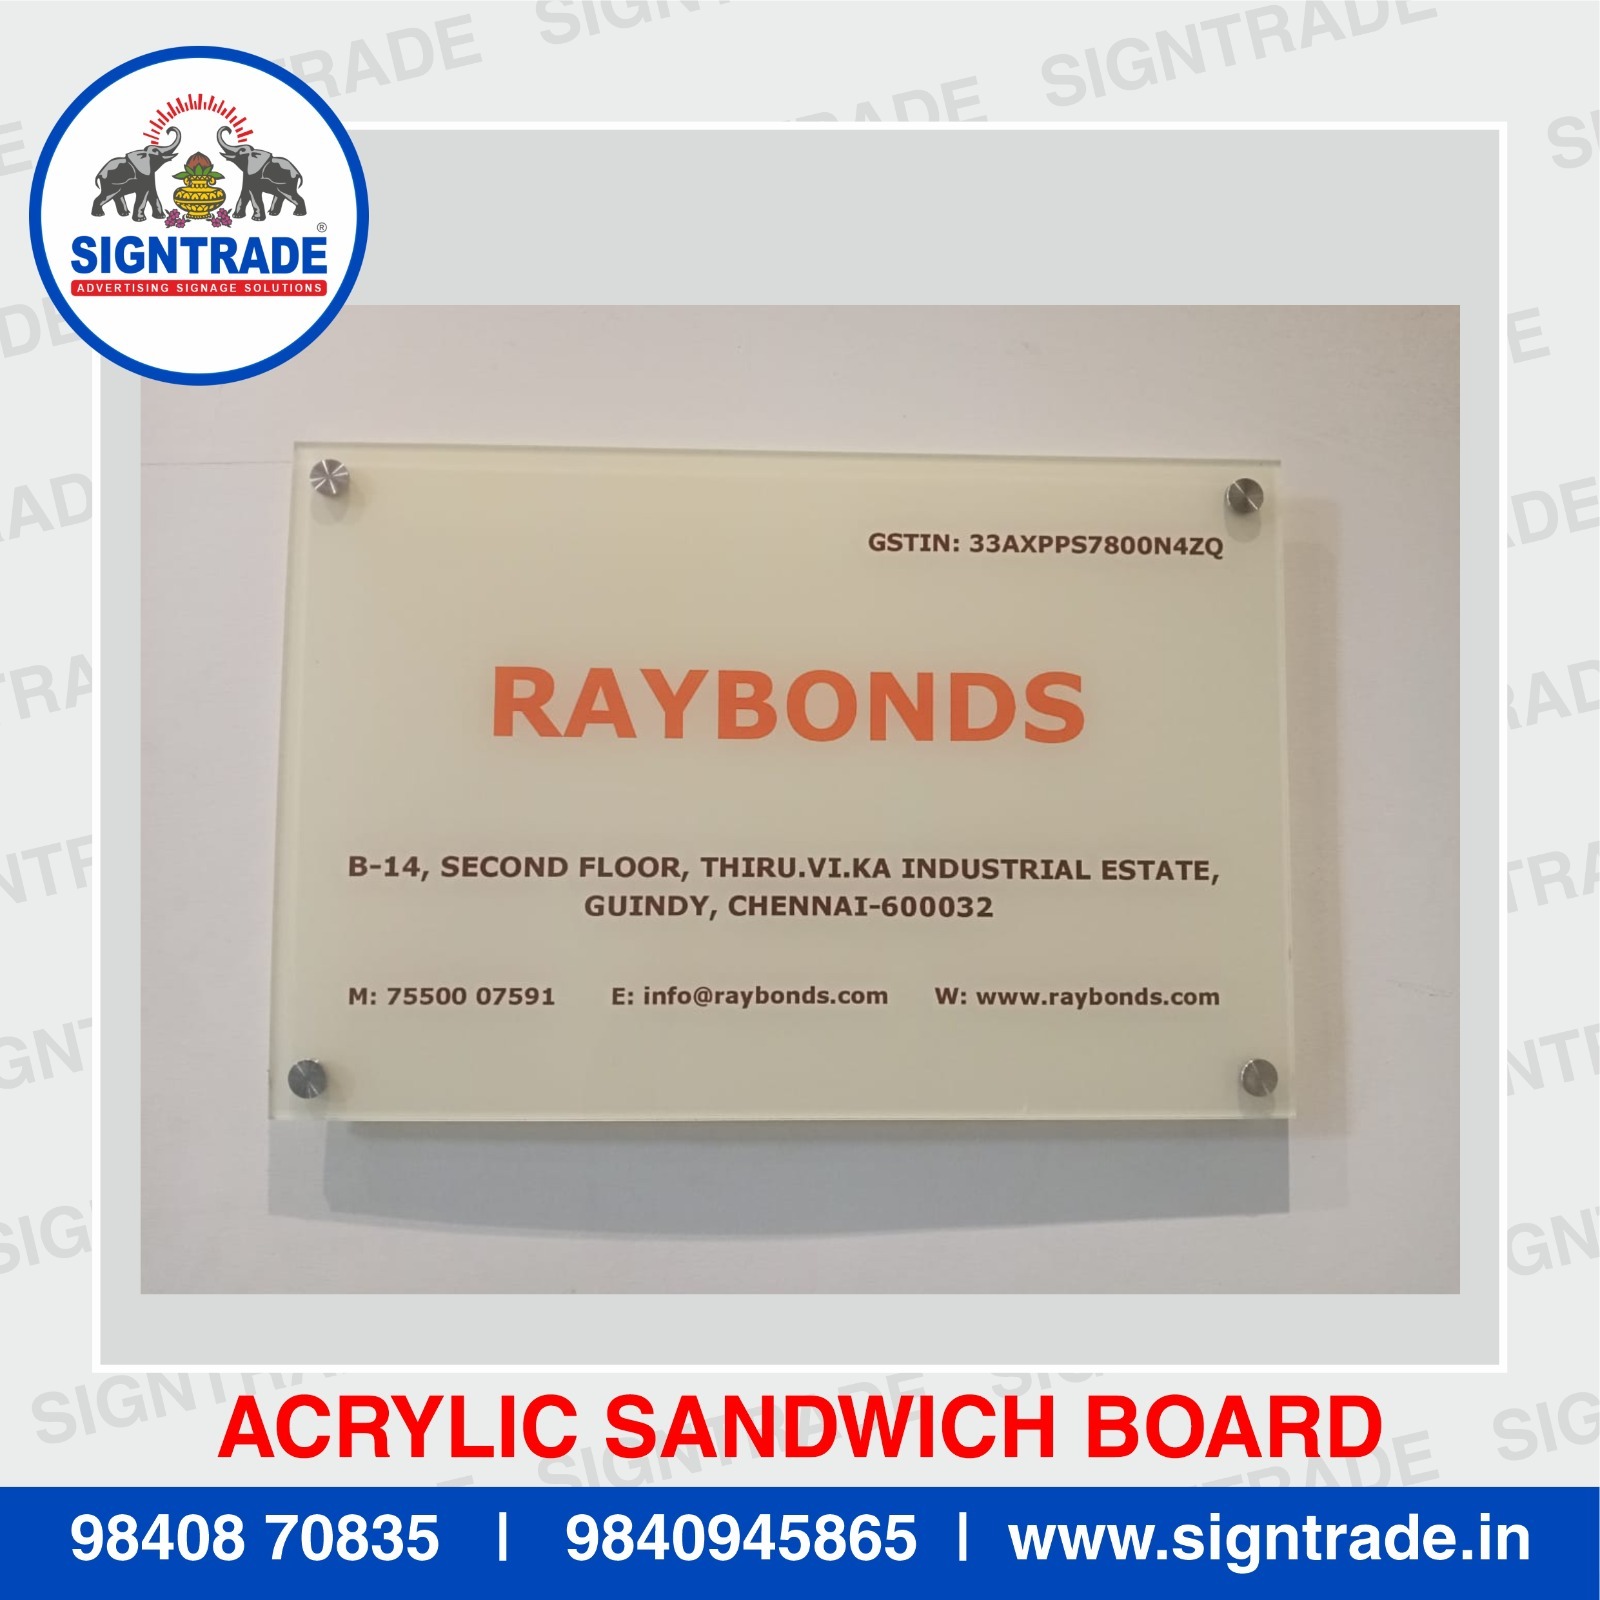 Acrylic Sandwich Display Board near me in Guindy